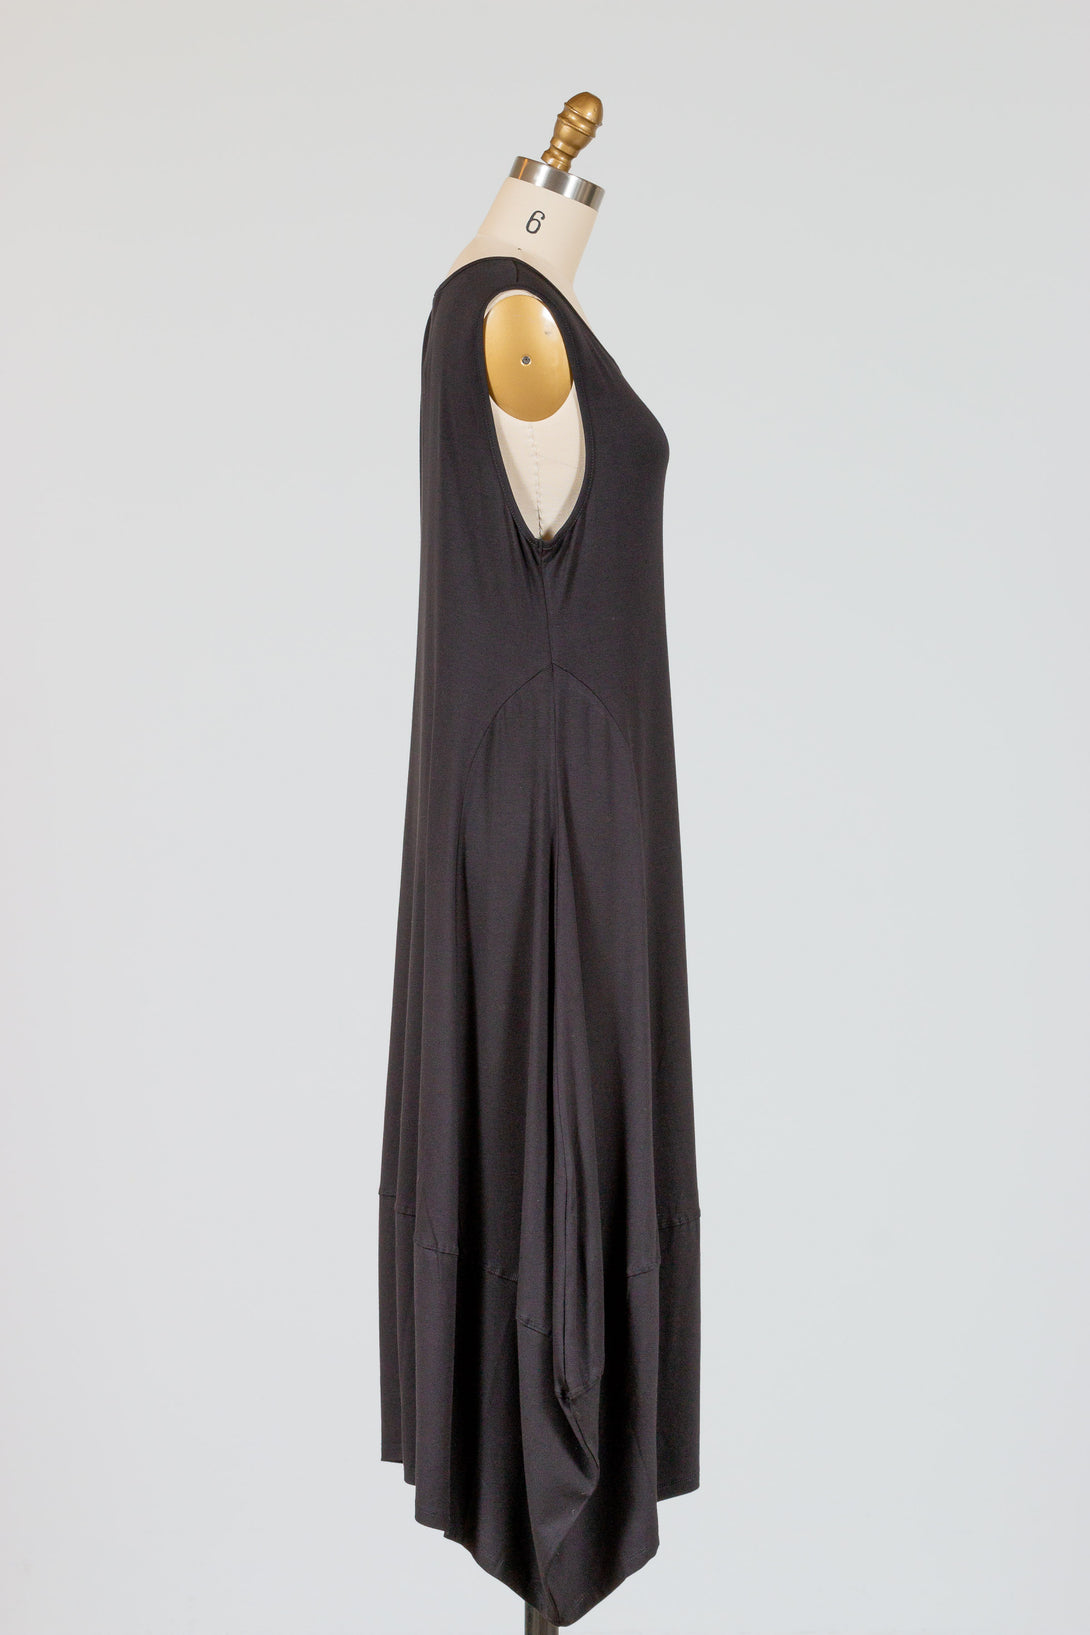 Kozan Dina Dress (Cotton Jersey) {Black}